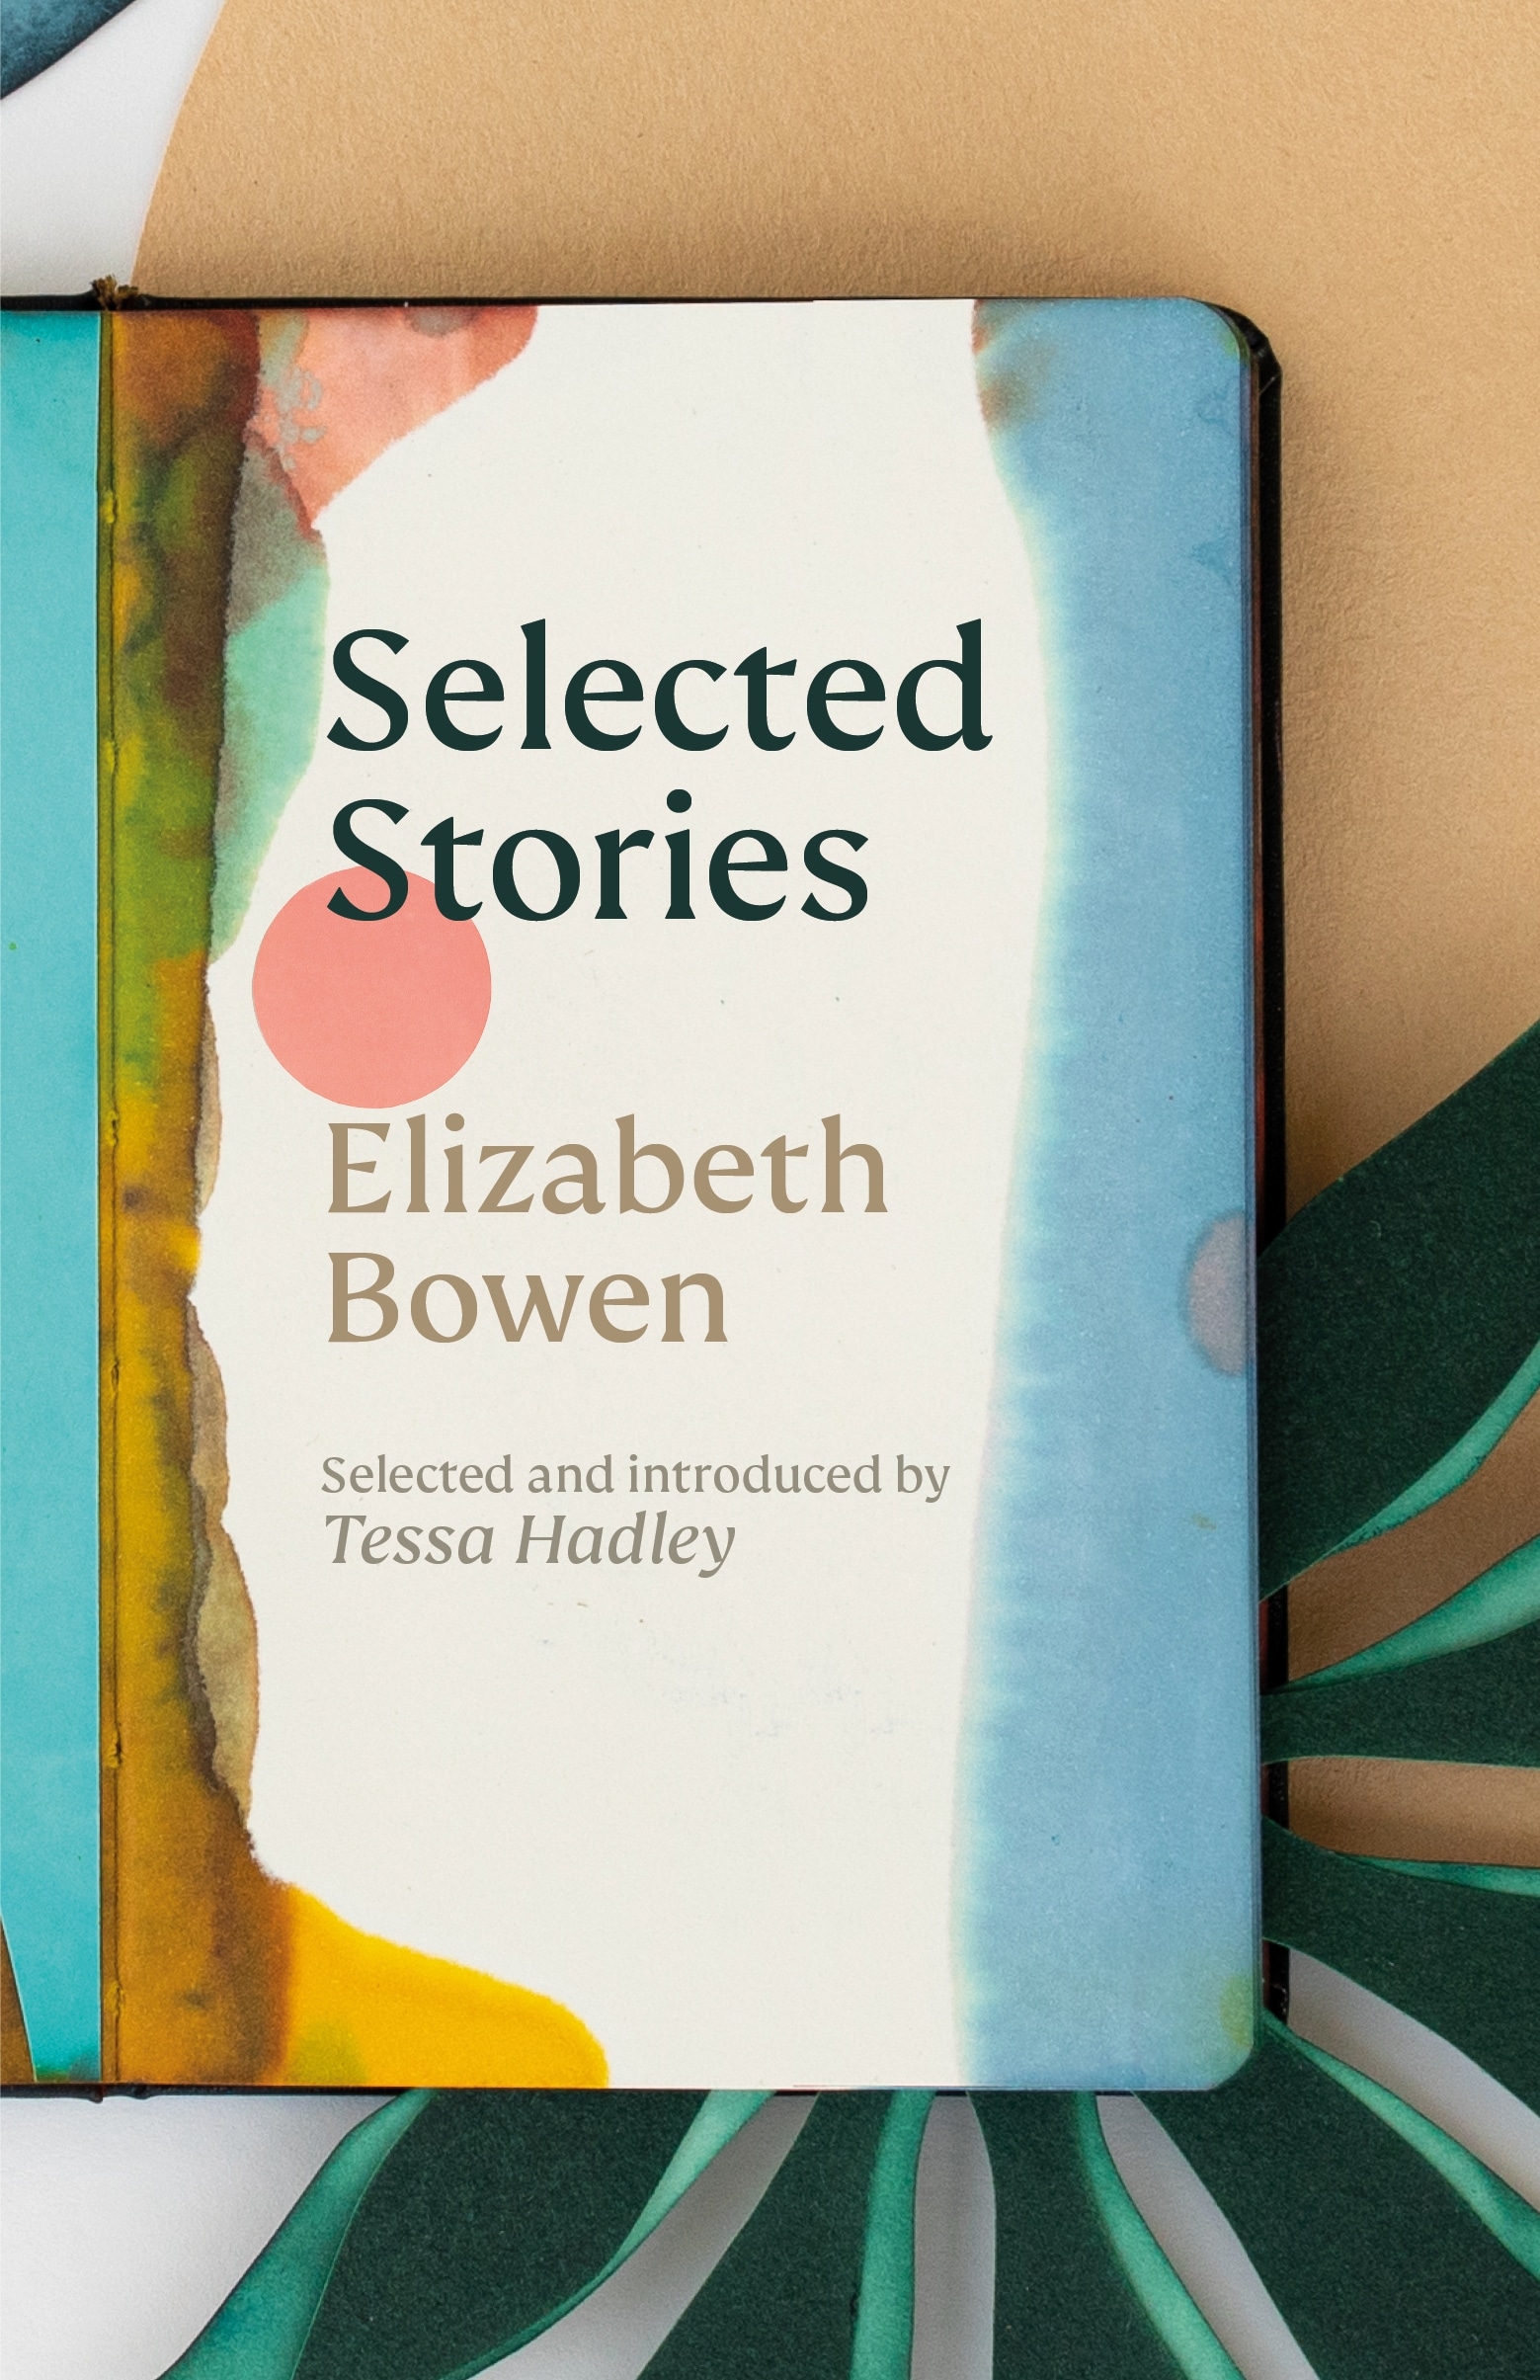 Book “The Selected Stories of Elizabeth Bowen” by Elizabeth Bowen, Tessa Hadley — April 8, 2021